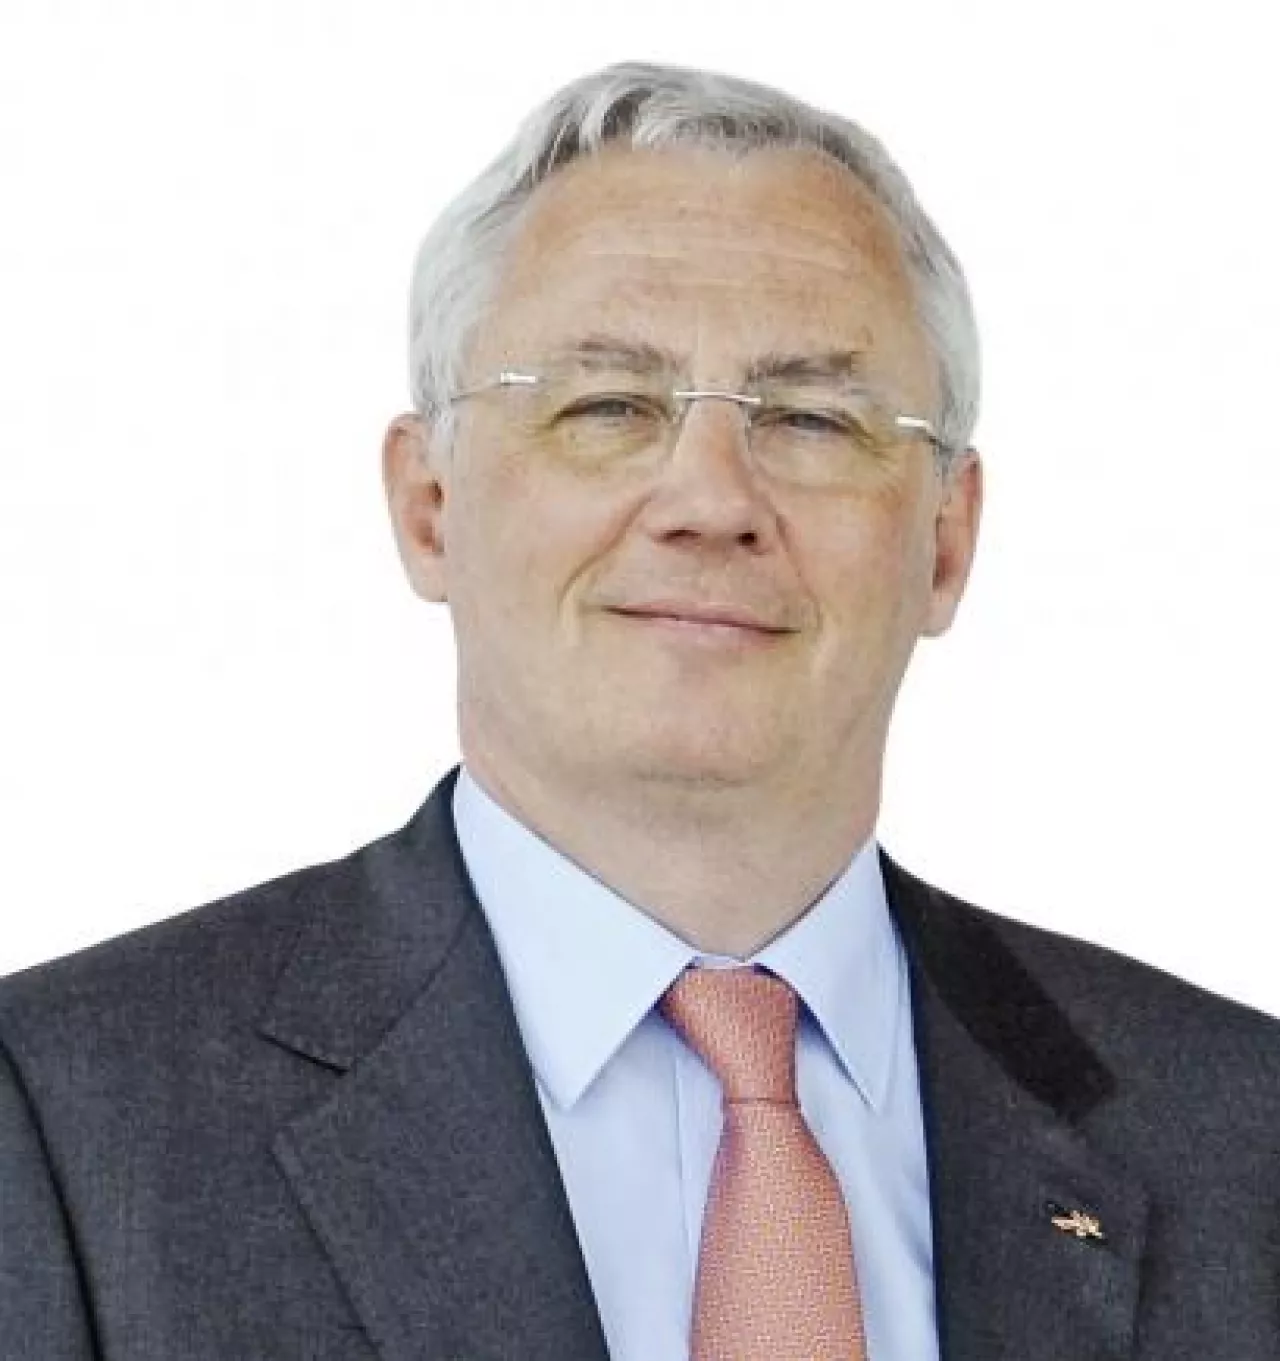 Didier Duhaupand, prezes Dyrekcji Grupy Muszkieterów / Société Les Mousquetaires (materiały prasowe)